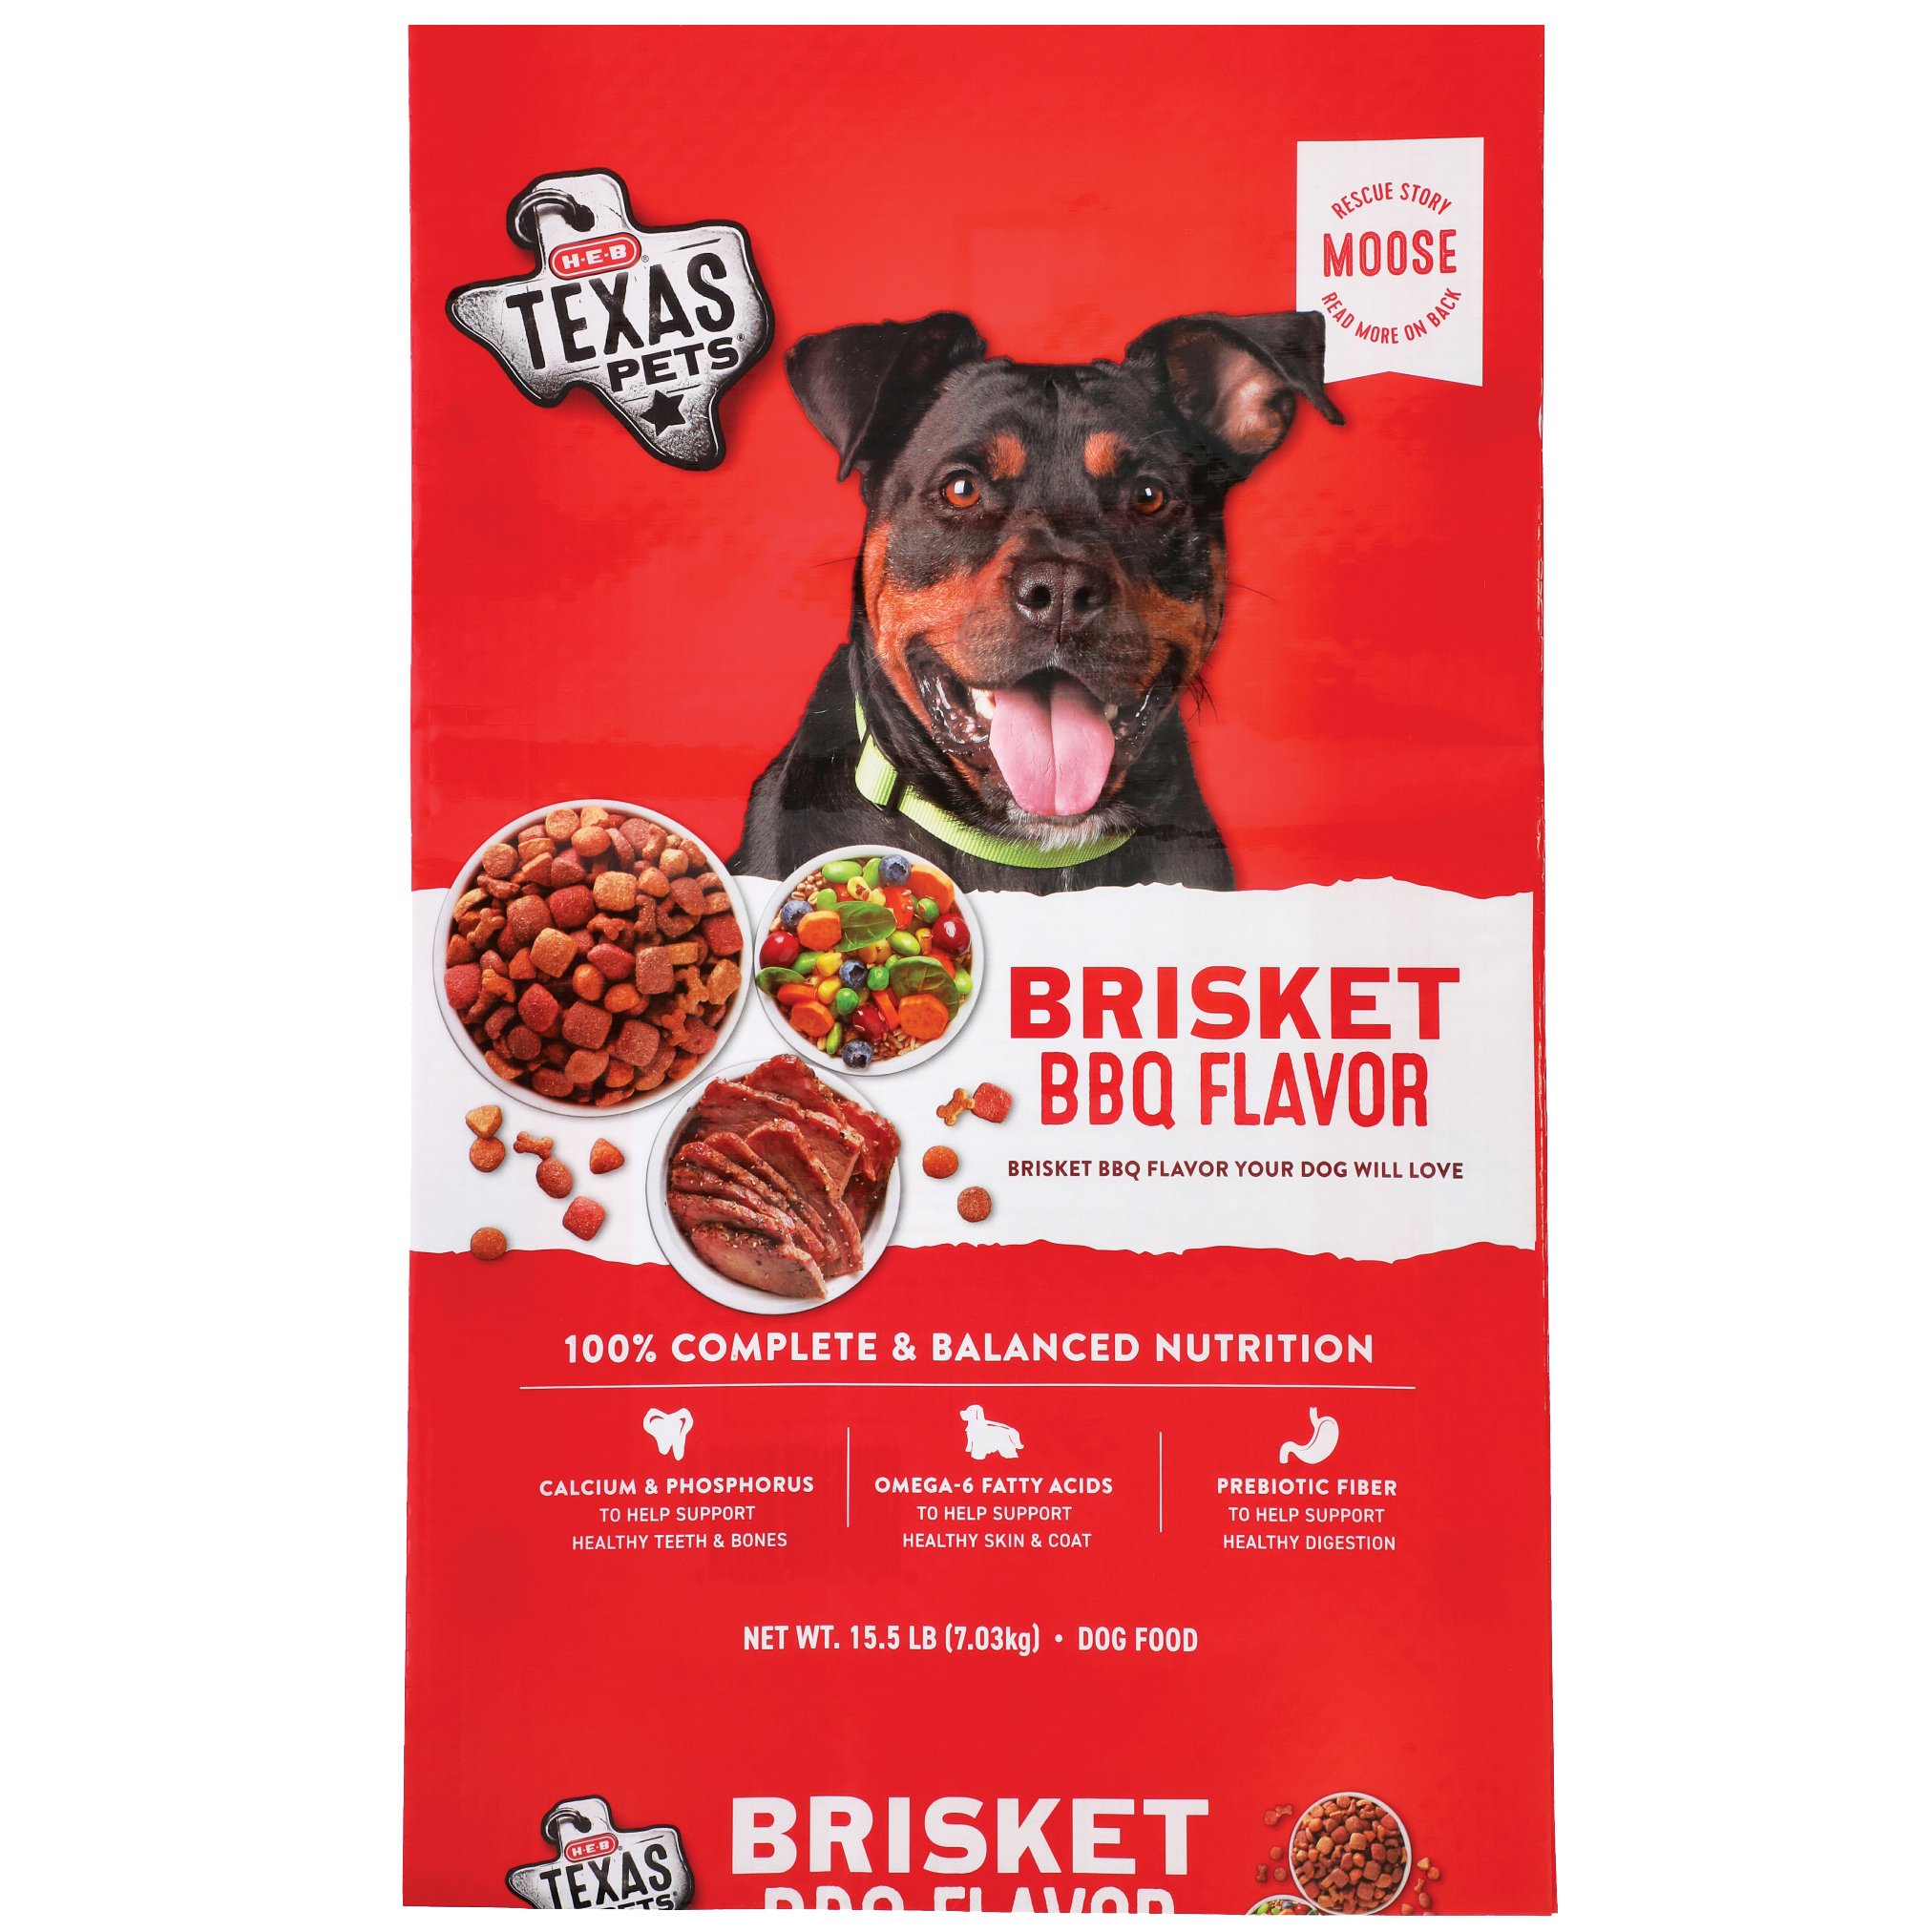 HEB Texas Pets Brisket BBQ Flavor Dry Dog Food Shop Dogs at HEB